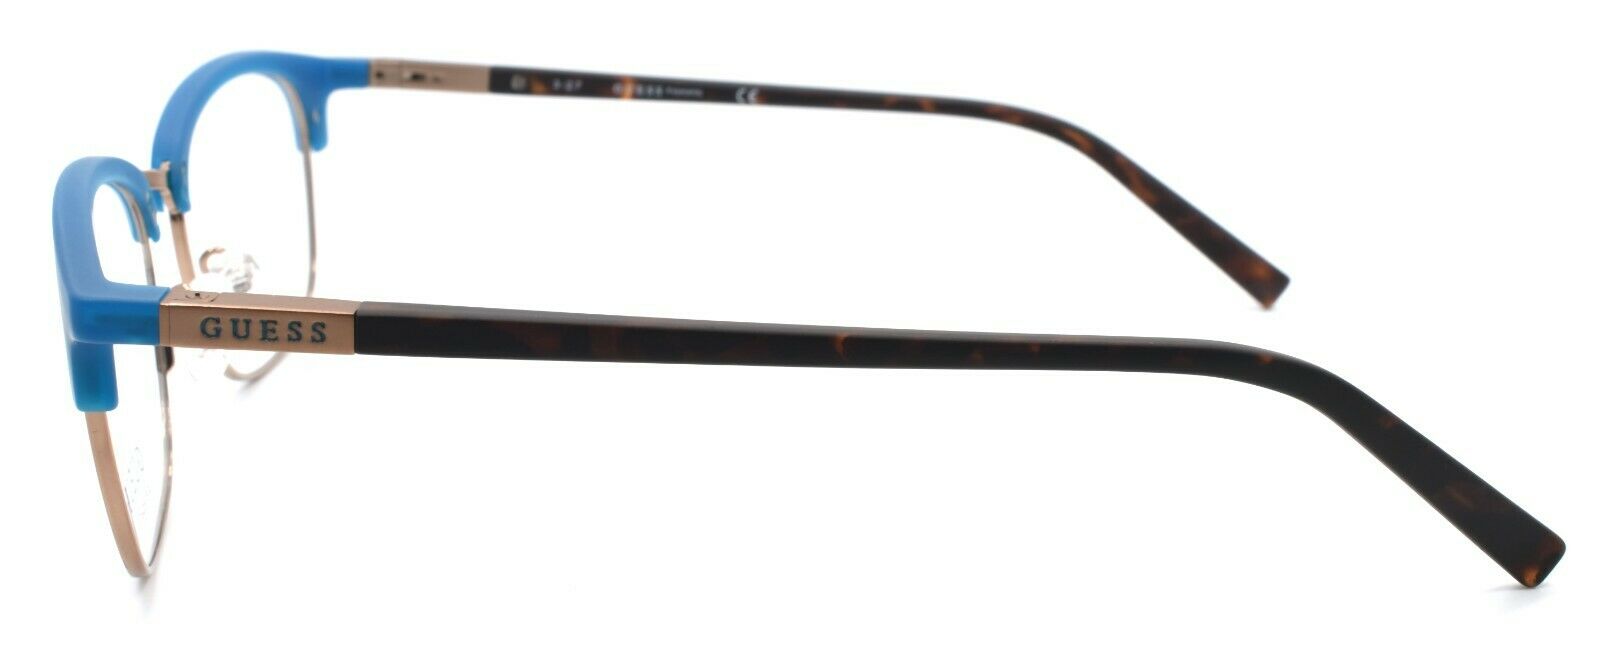 3-GUESS GU3024 088 Eye Candy Women's Eyeglasses Frames 51-17-135 Matte Turquoise-664689924622-IKSpecs